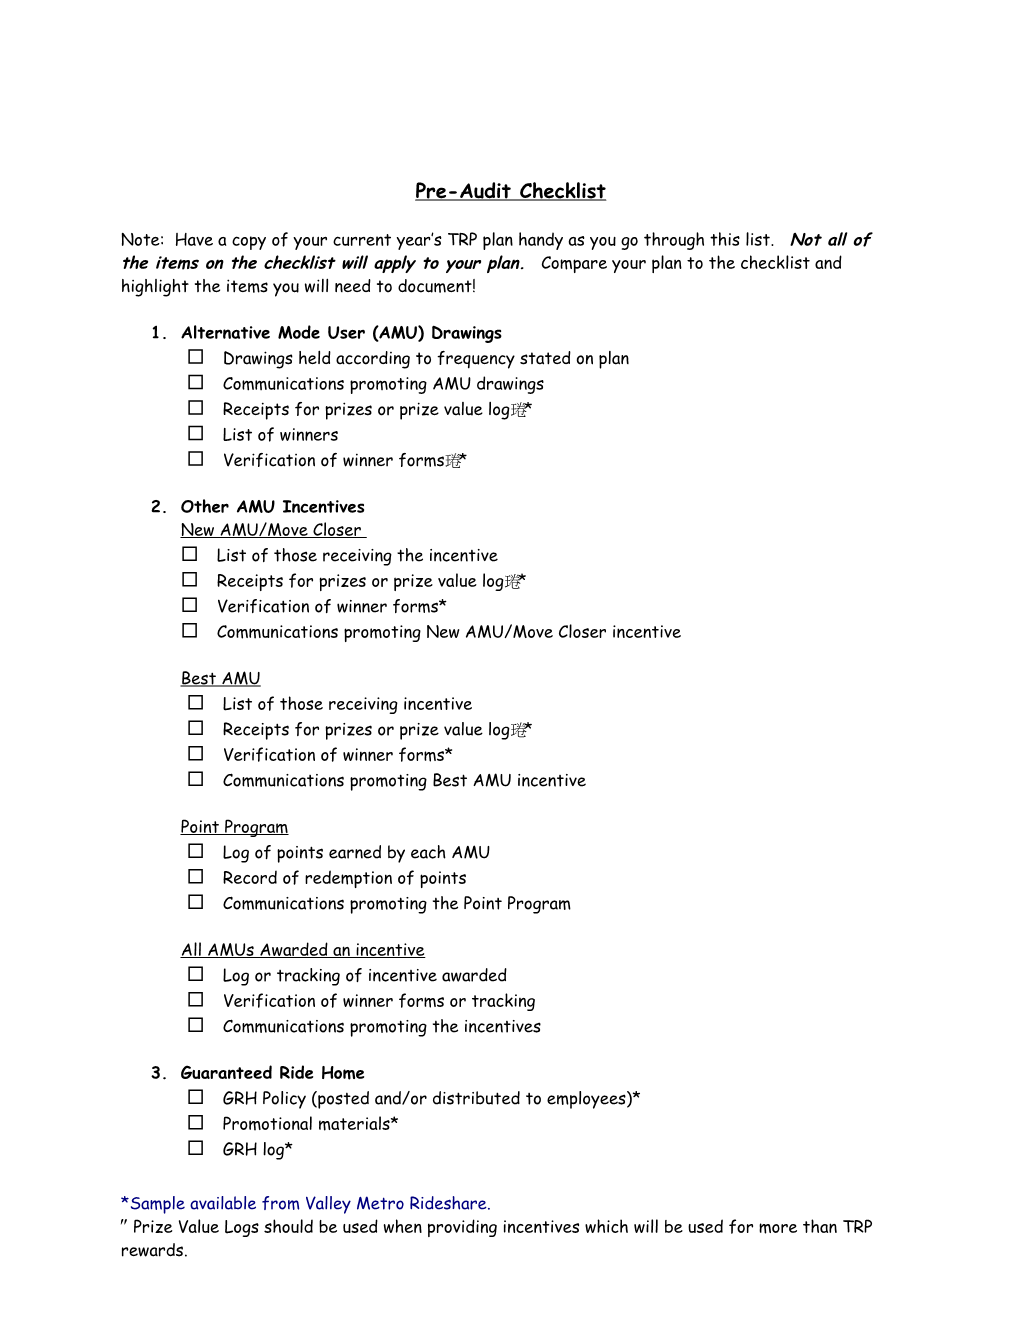 Pre-Audit Checklist